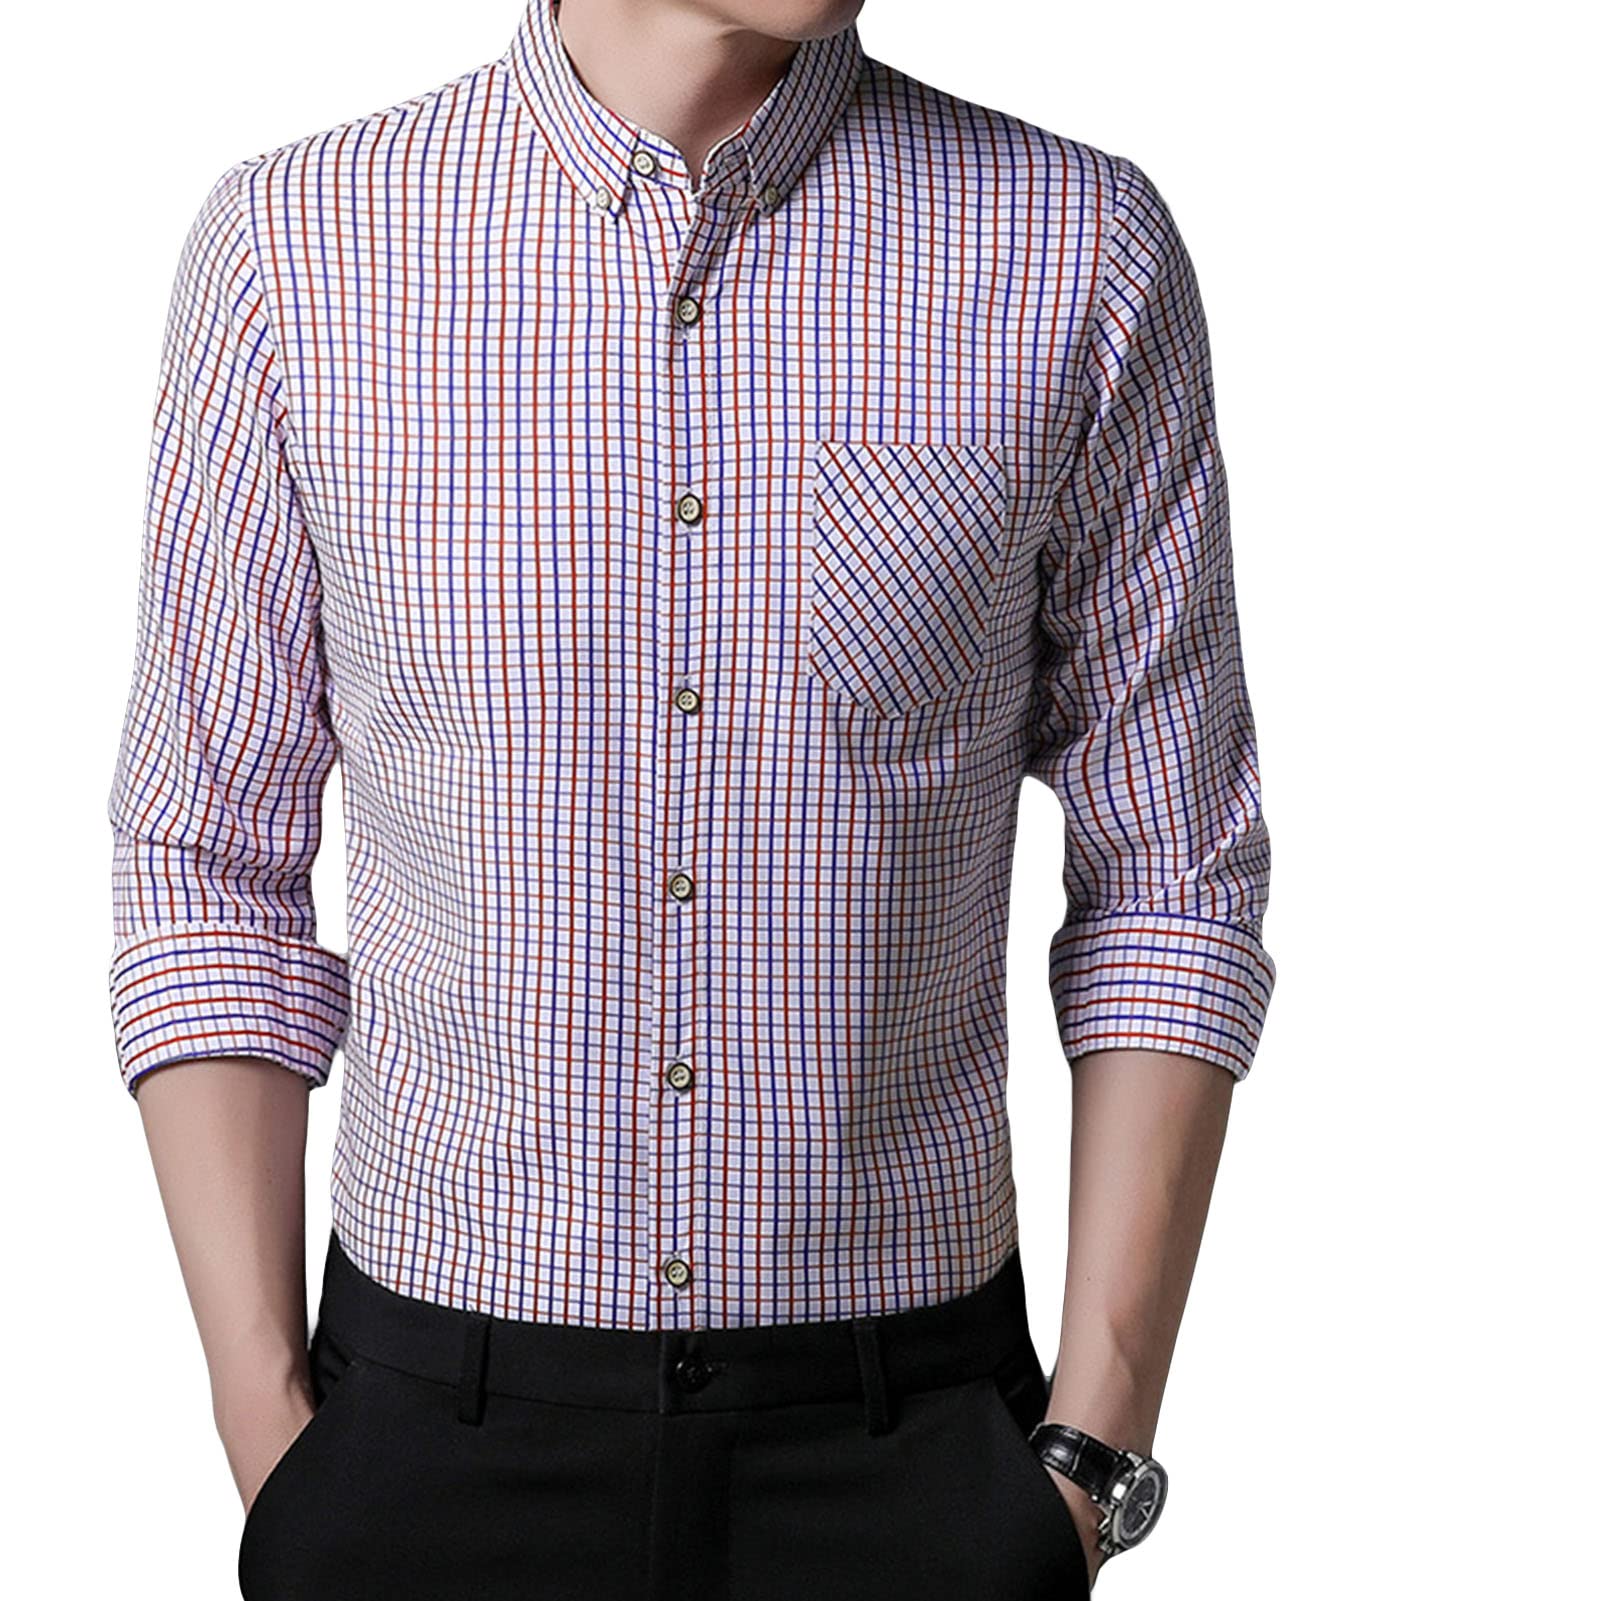 Men's Plaid Long Sleeve Stylish Shirts Striped Lightweight Slim Shirts Classic Business Button Down Dress Shirt (Red,3X-Large)